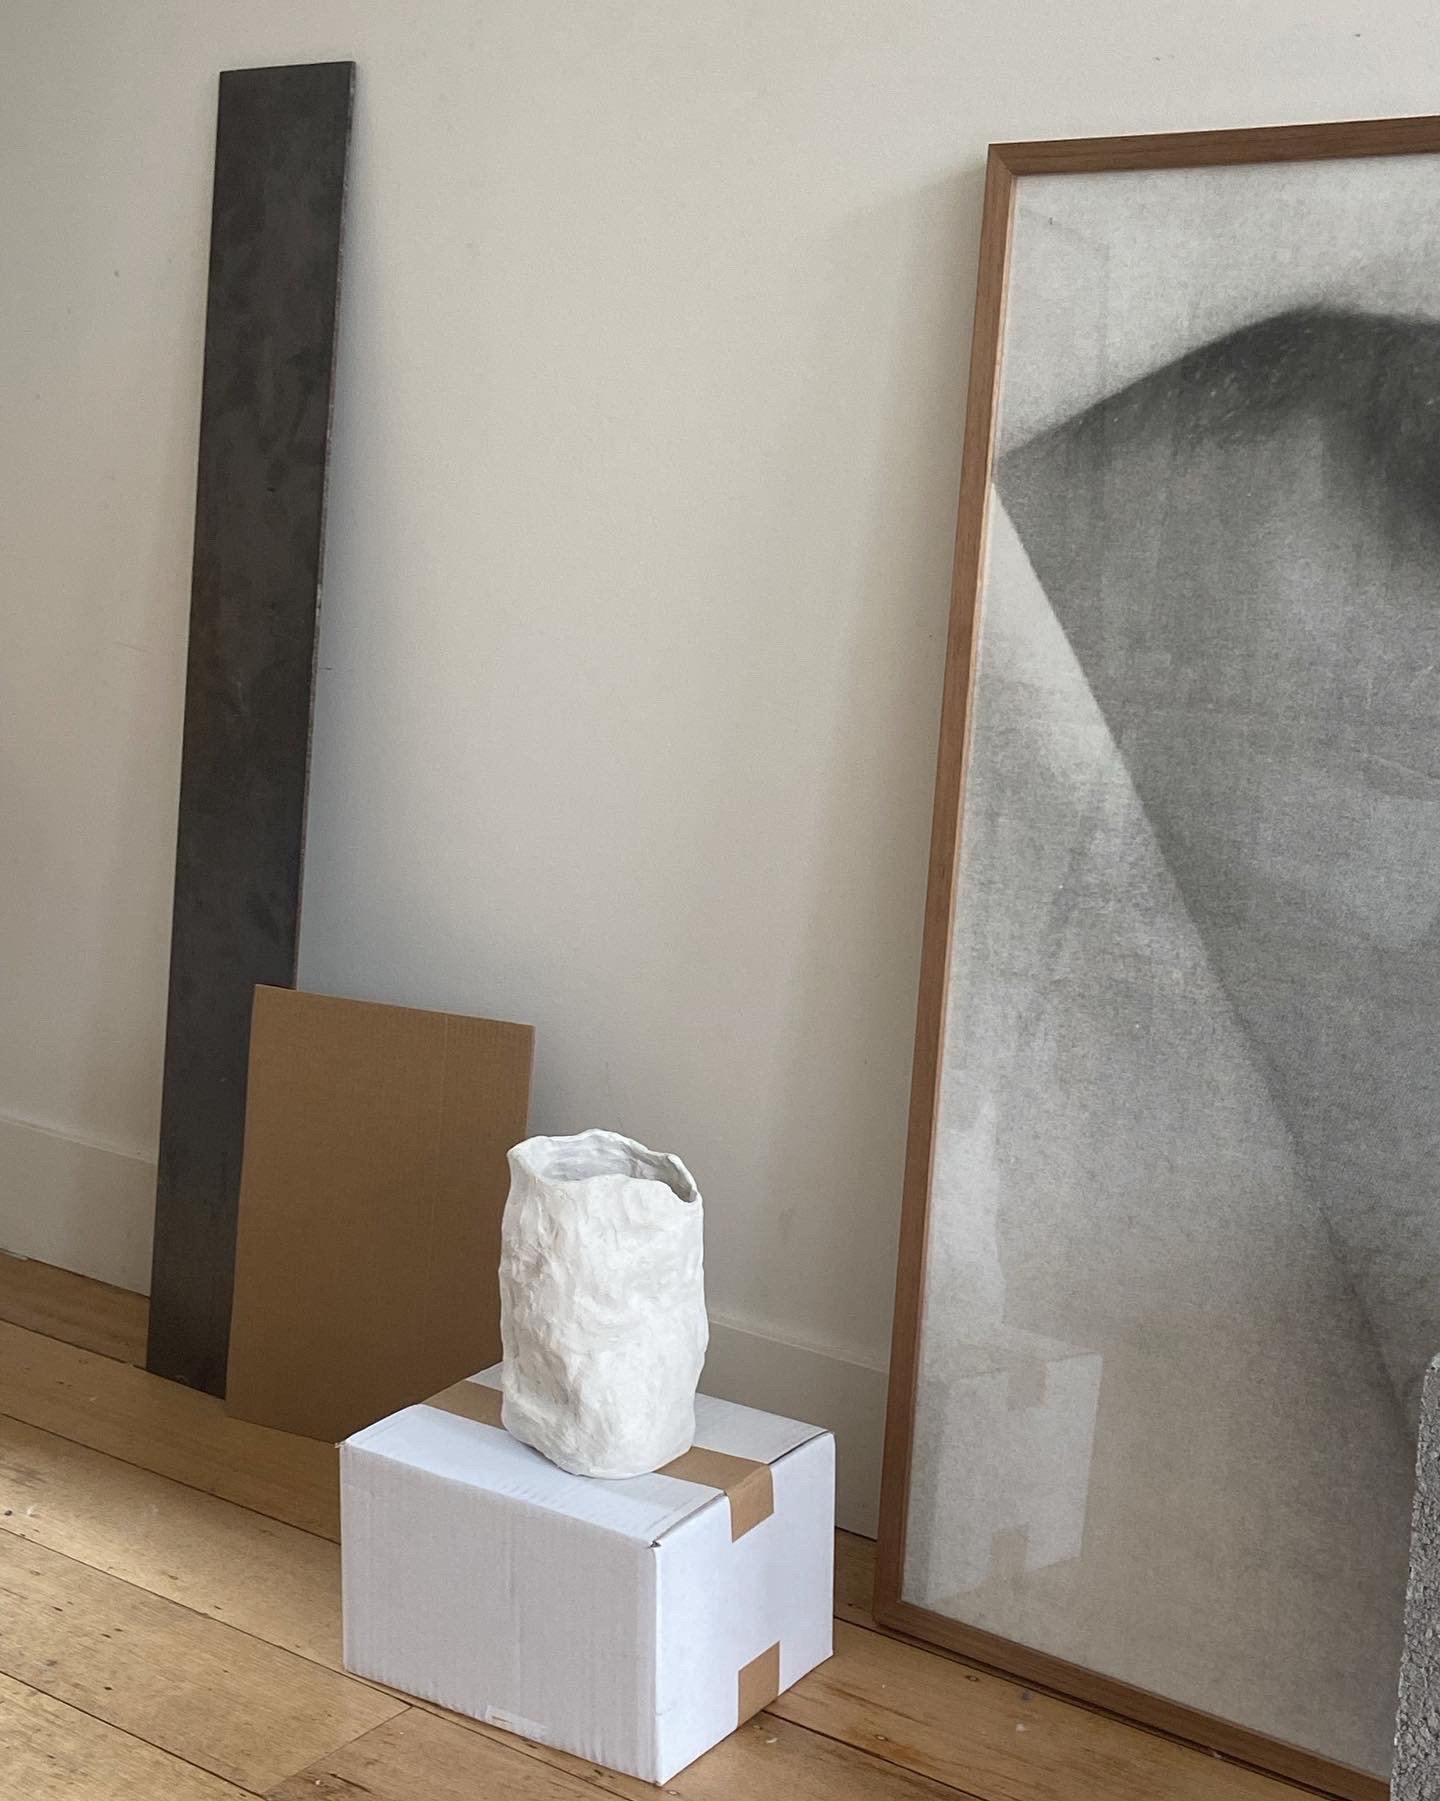 Untitled, 2020, Cardboard box, ceramic vessel, steel beam, siliver-gelatin print